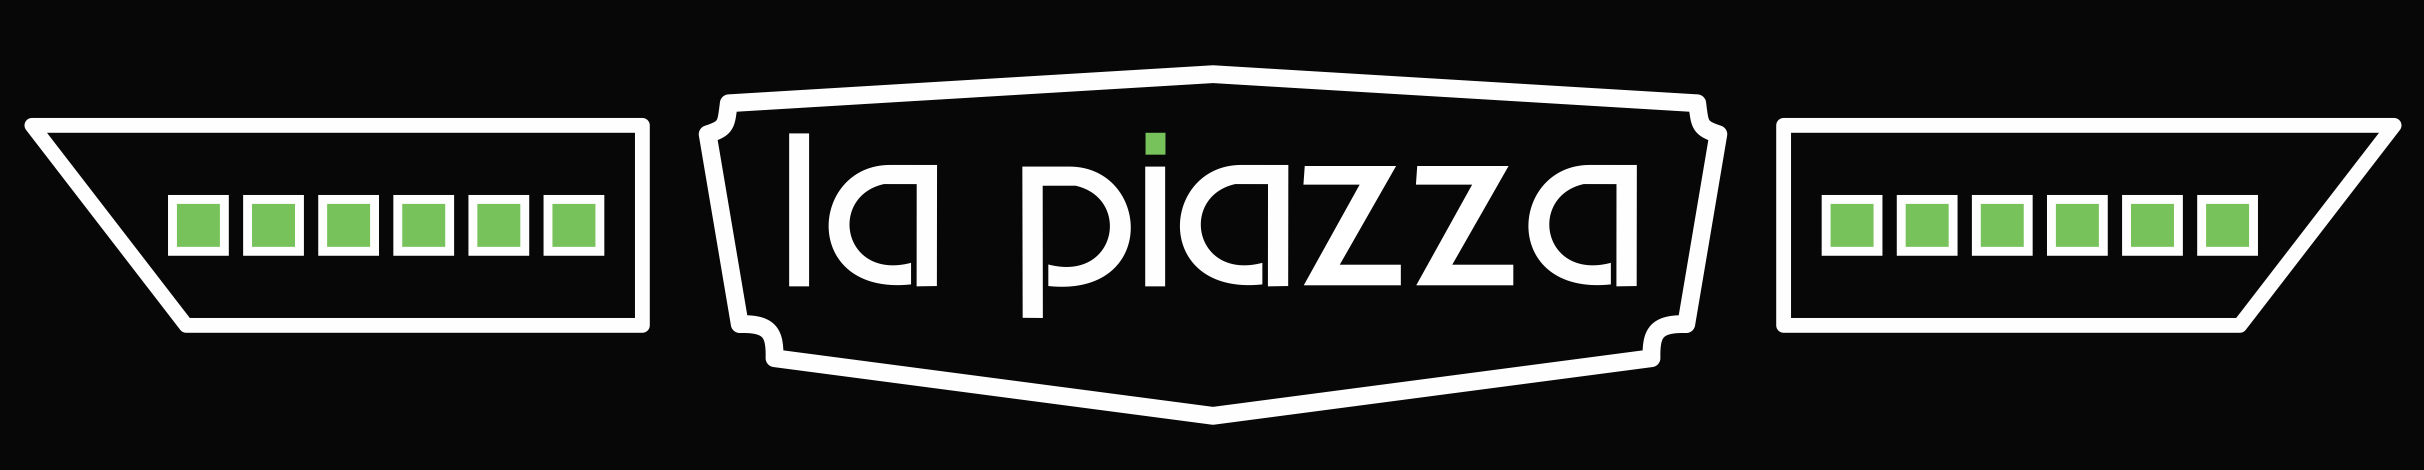 La Piazza Restaurant - Italian Restaurant Edinburgh Scotland